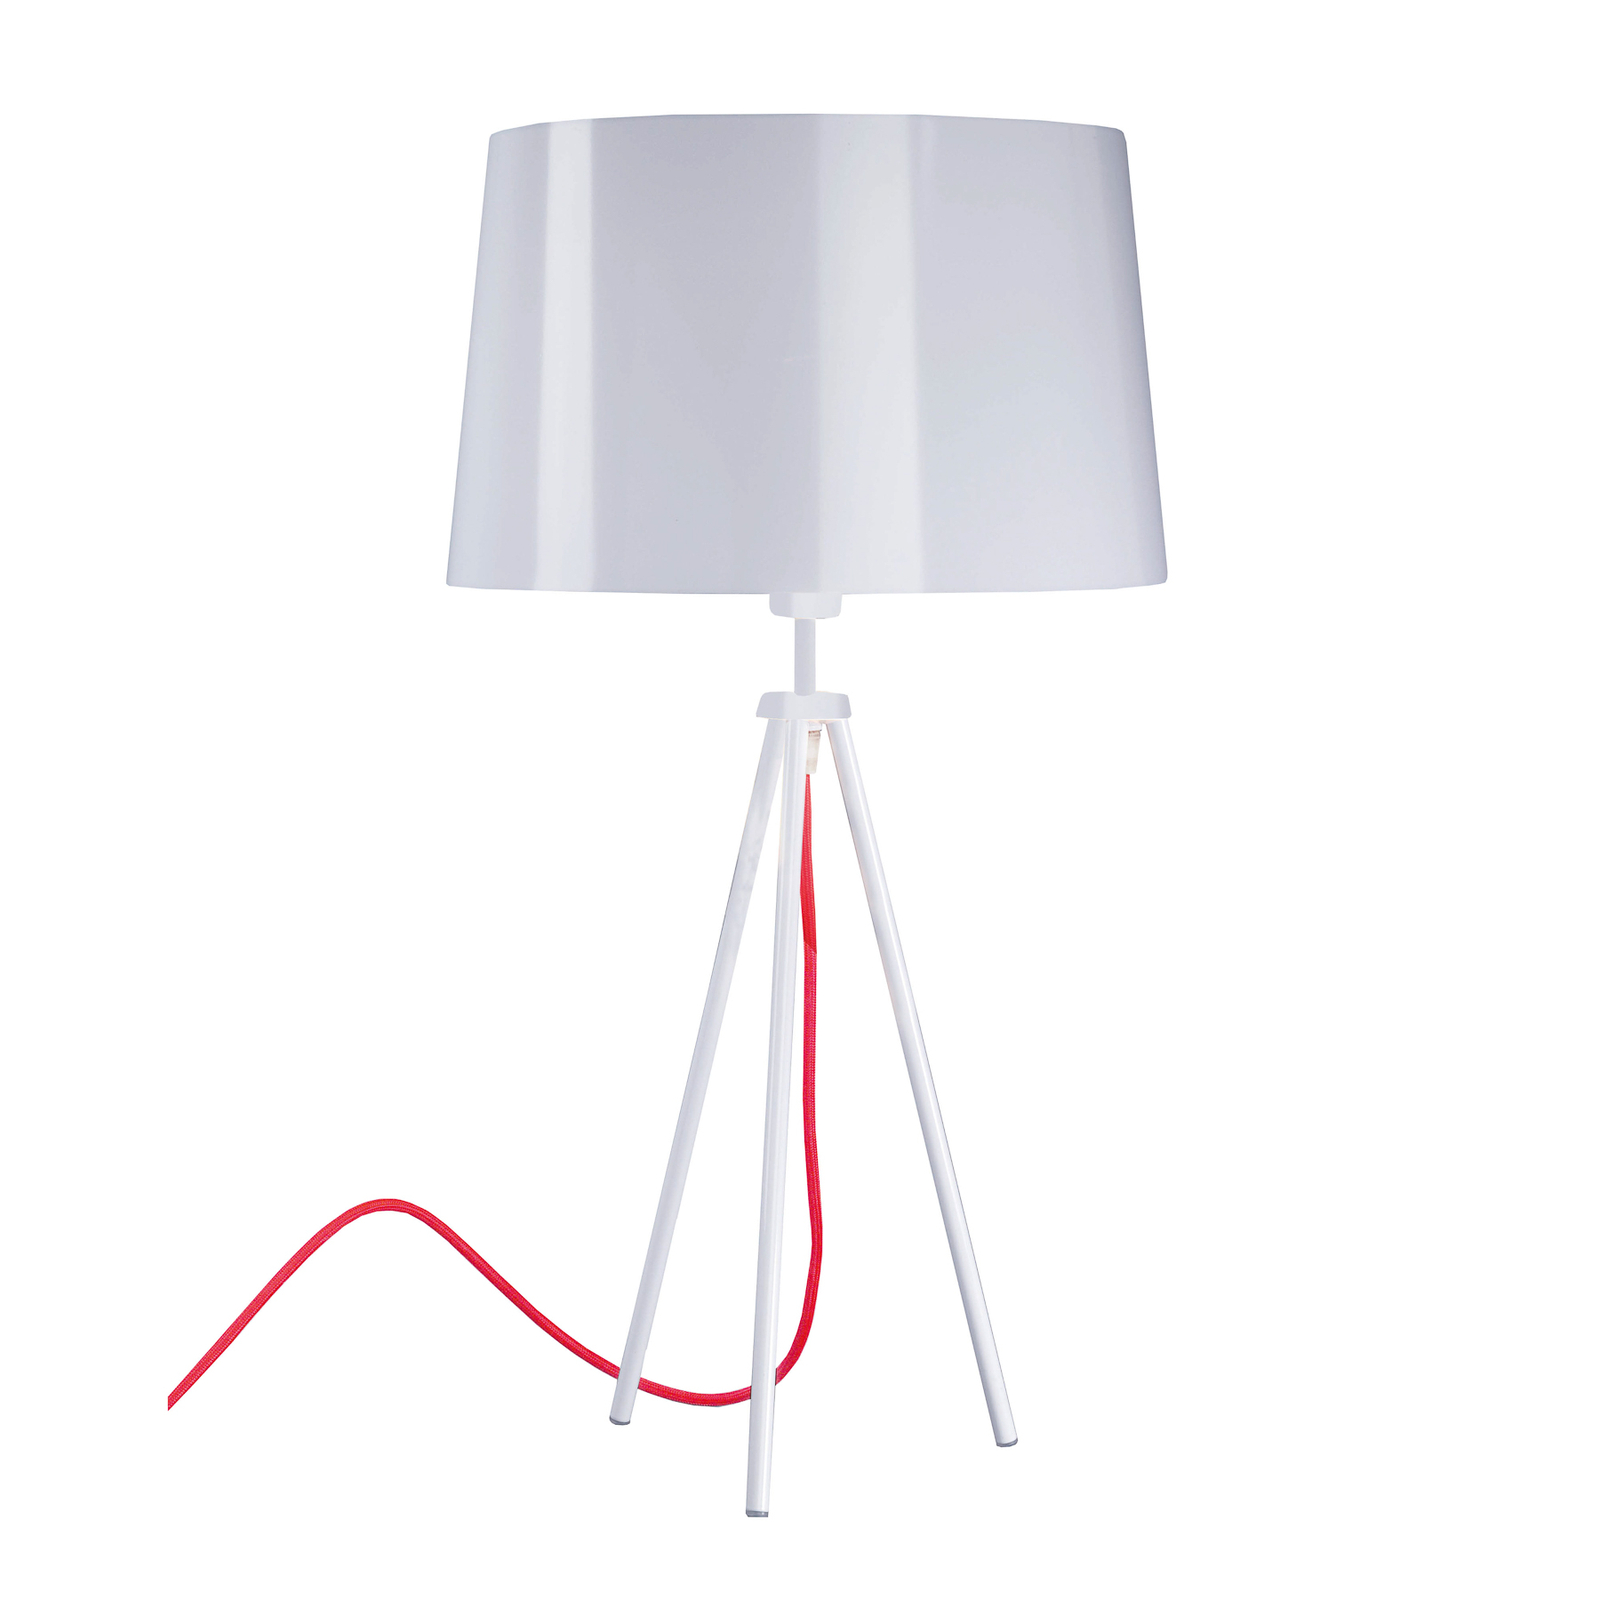 Aluminor Tropic lampe à poser blanche, câble rouge